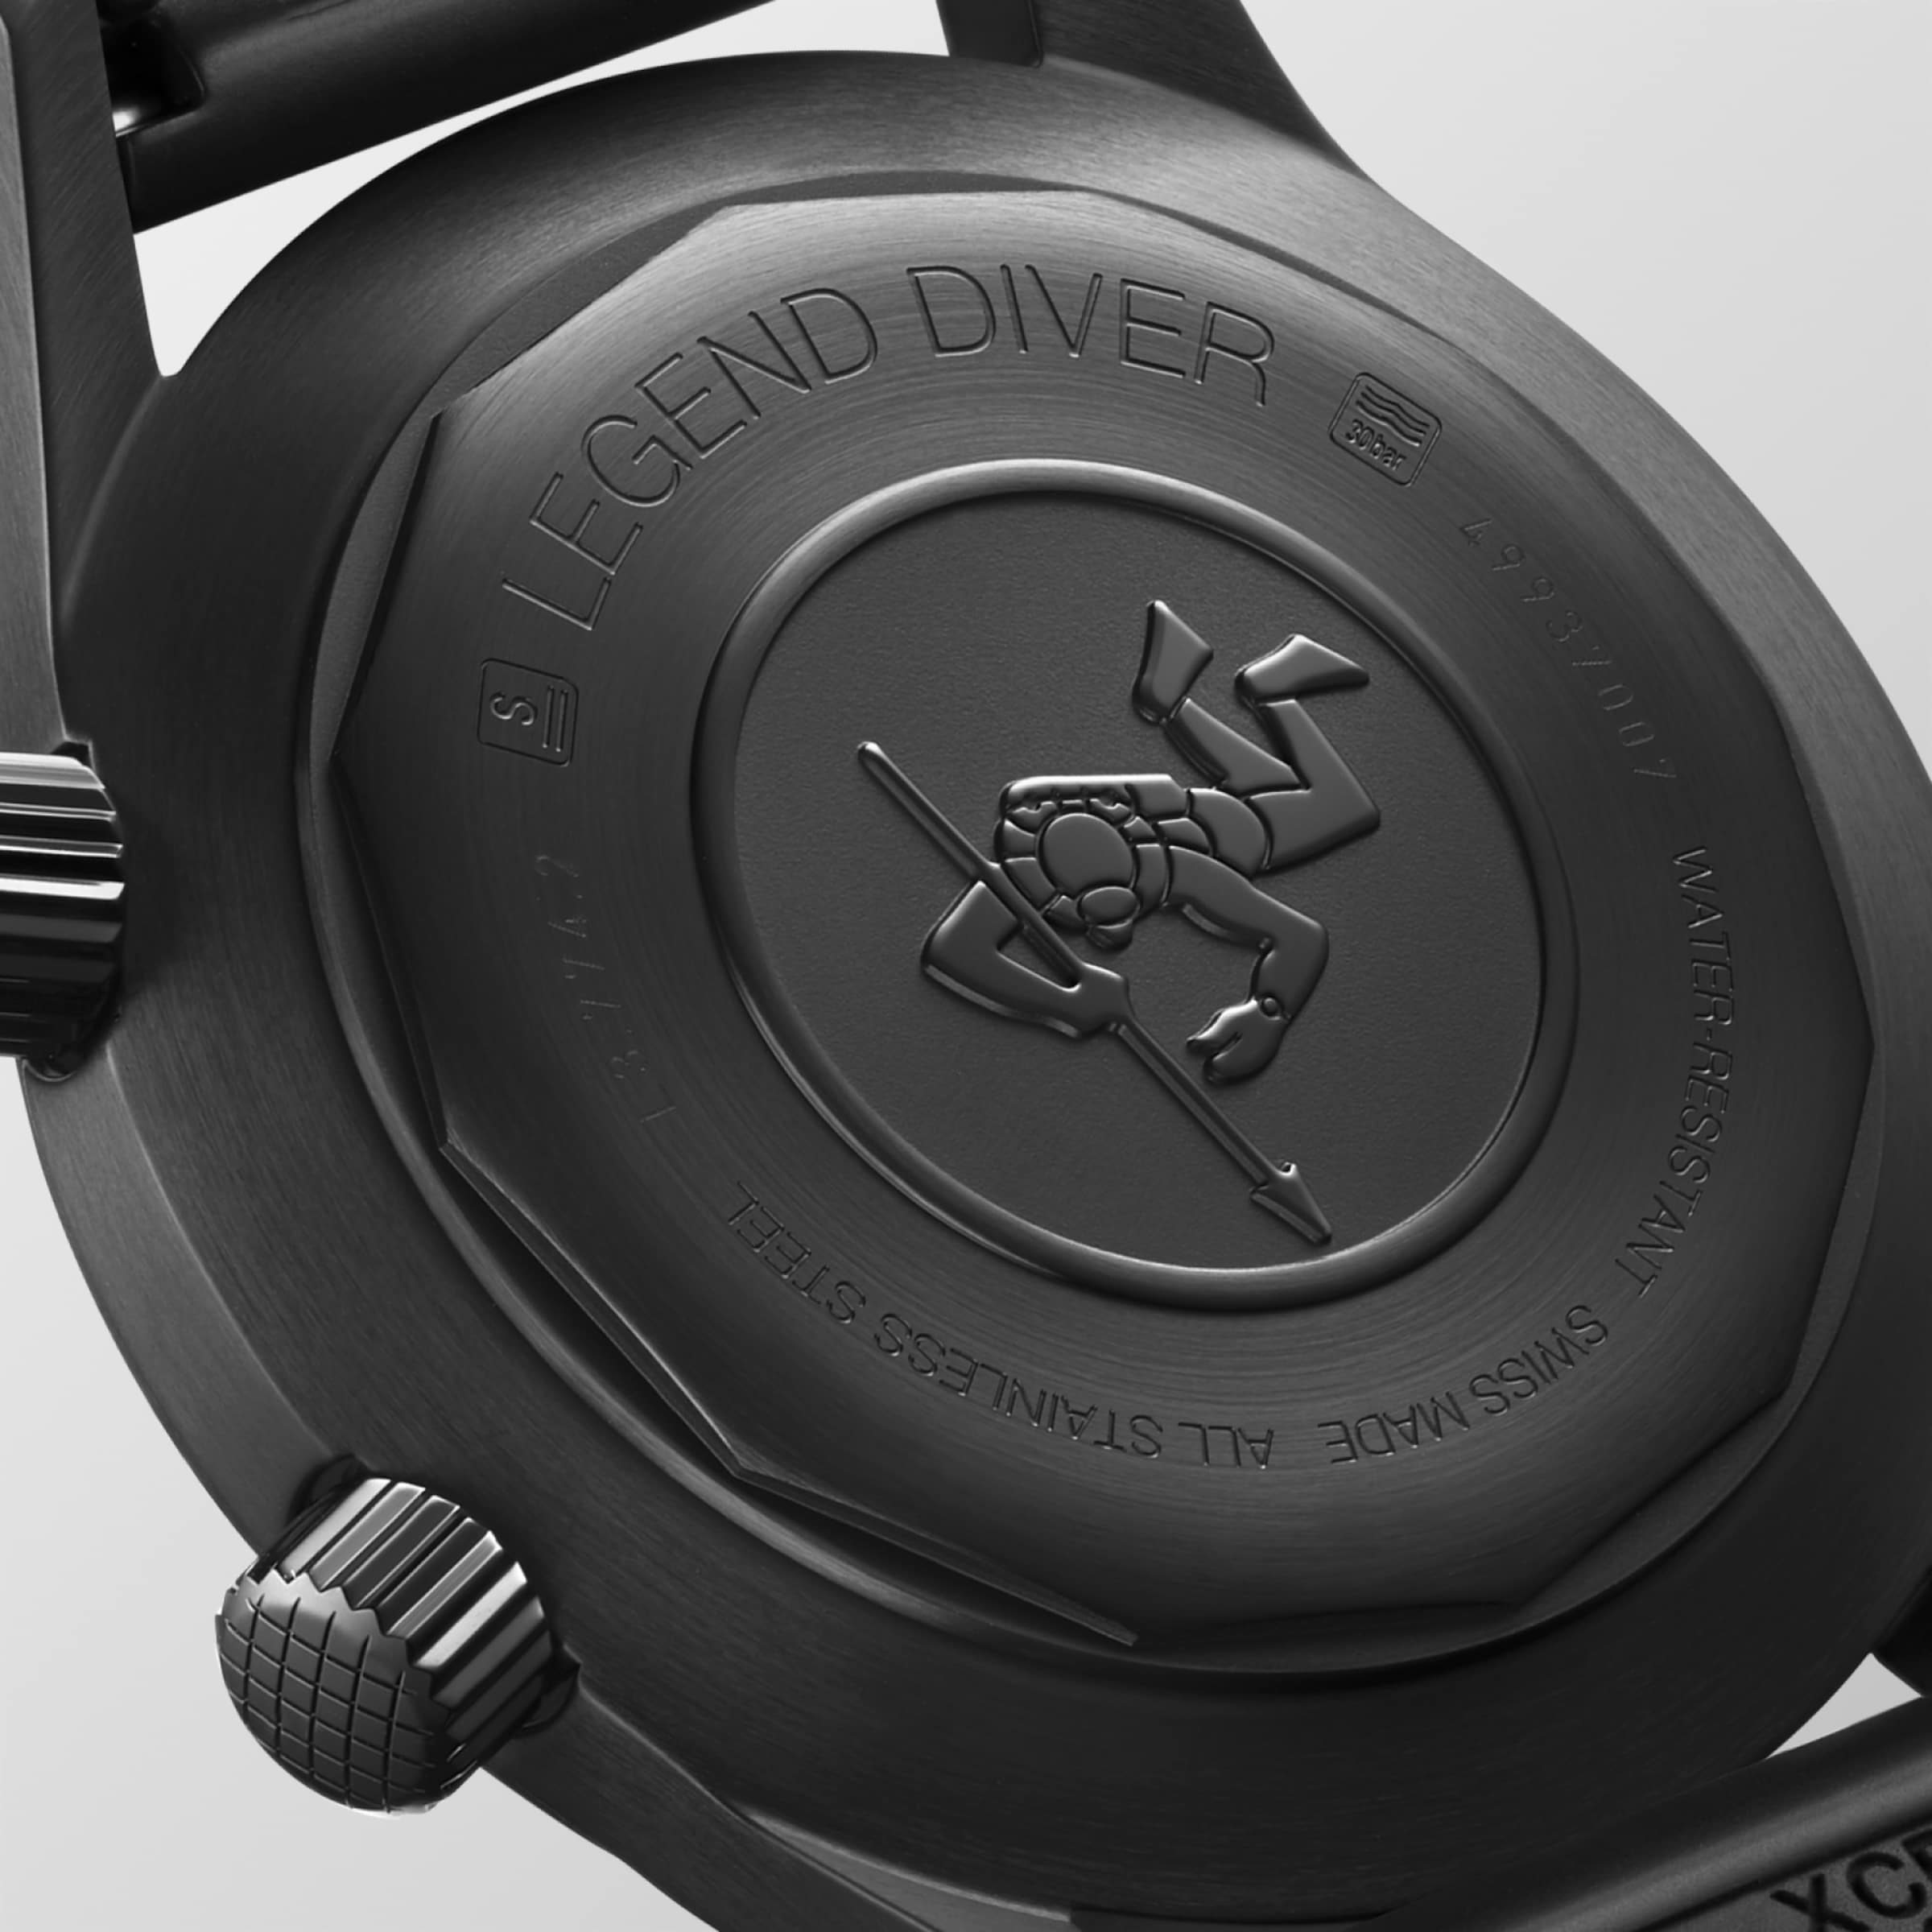 Longines LEGEND DIVER Automatic Black PVD coating Watch - L3.774.2.50.9